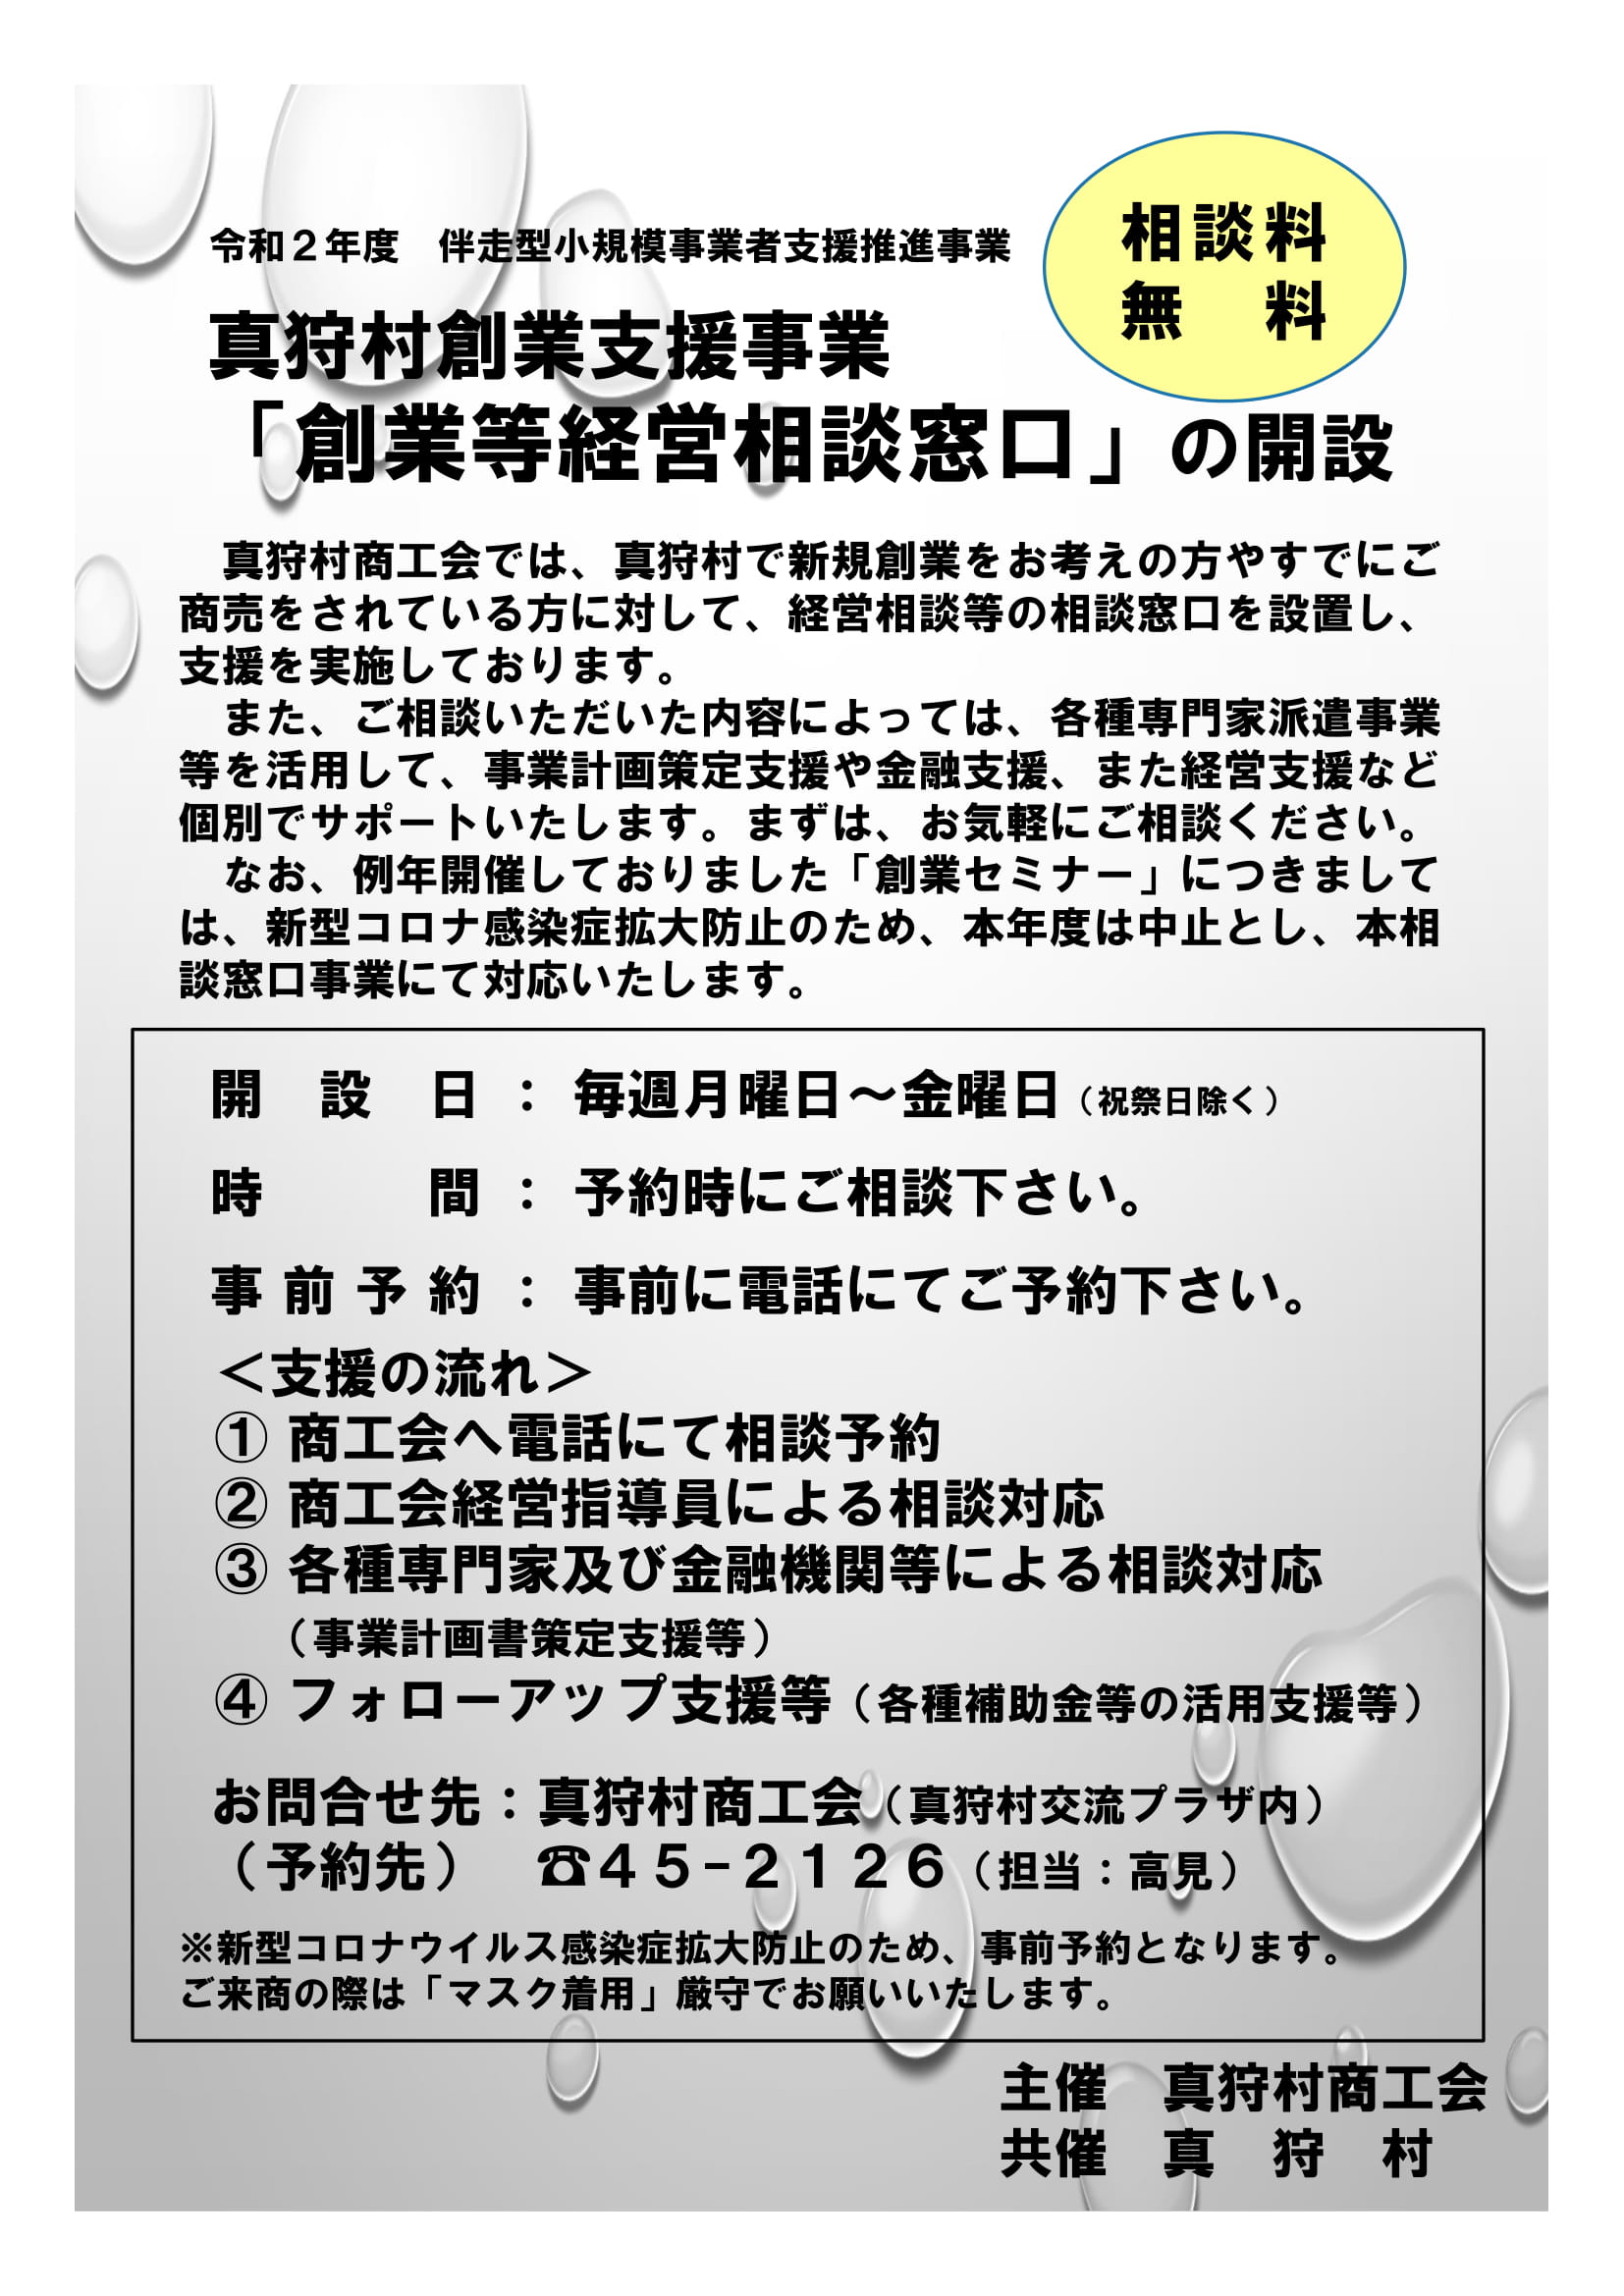 Ｒ2経営相談窓口事業（チラシ）-1.jpg